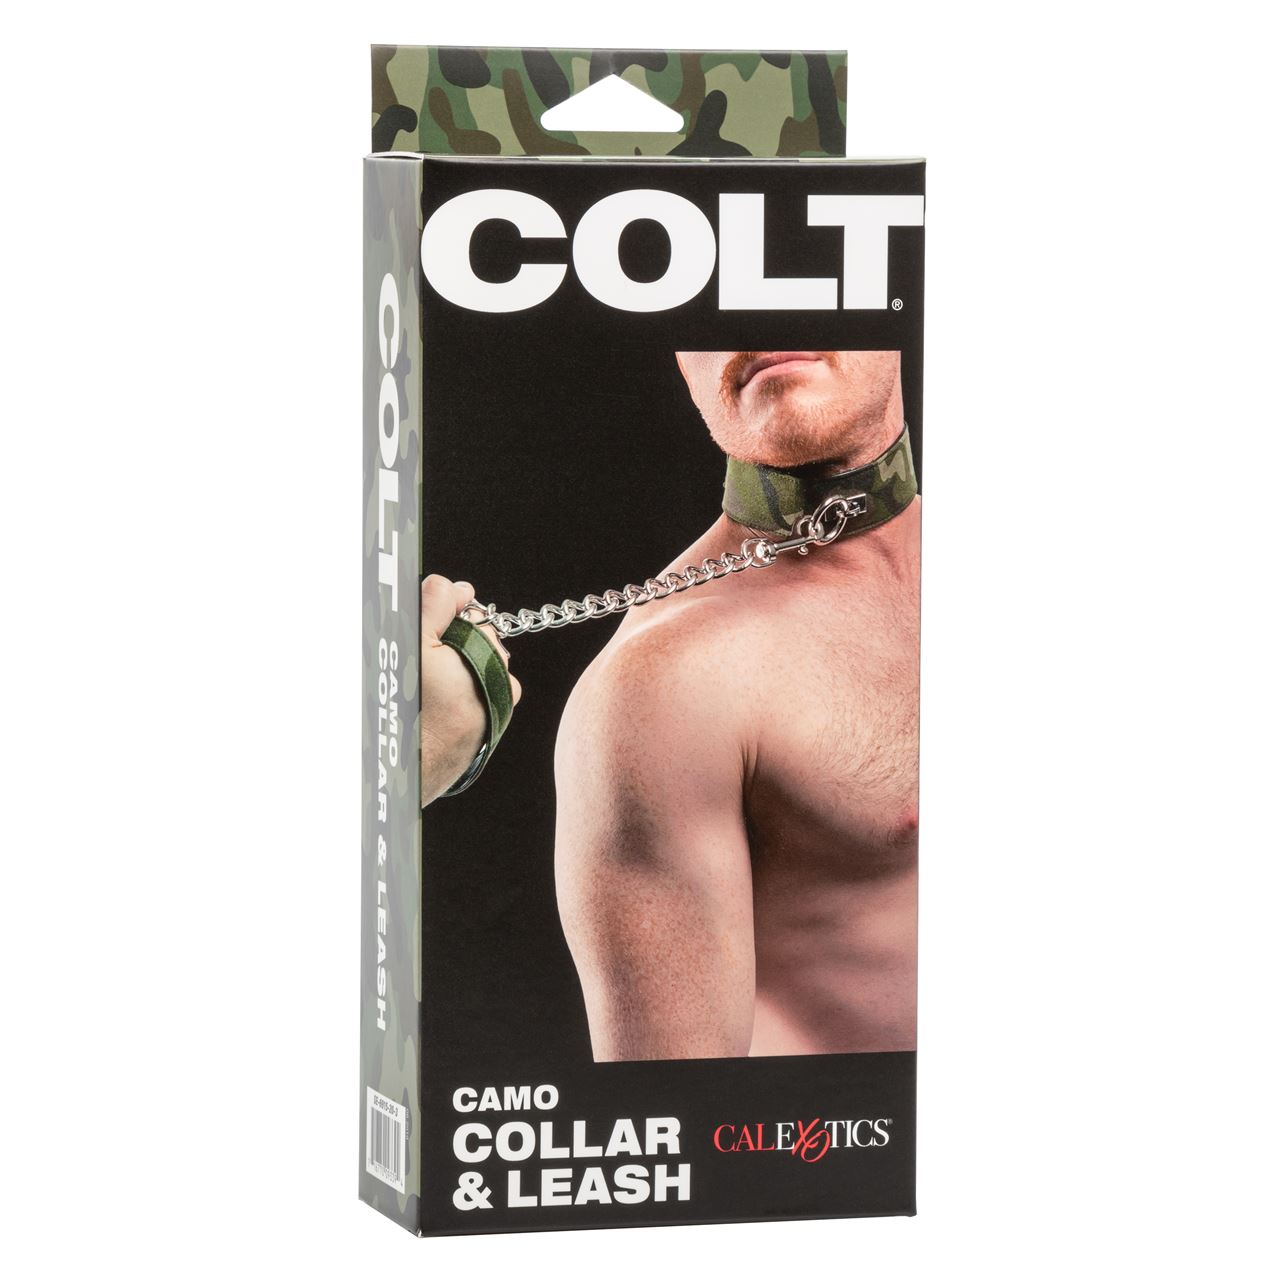 COLT Camo Collar & Leash - UABDSM